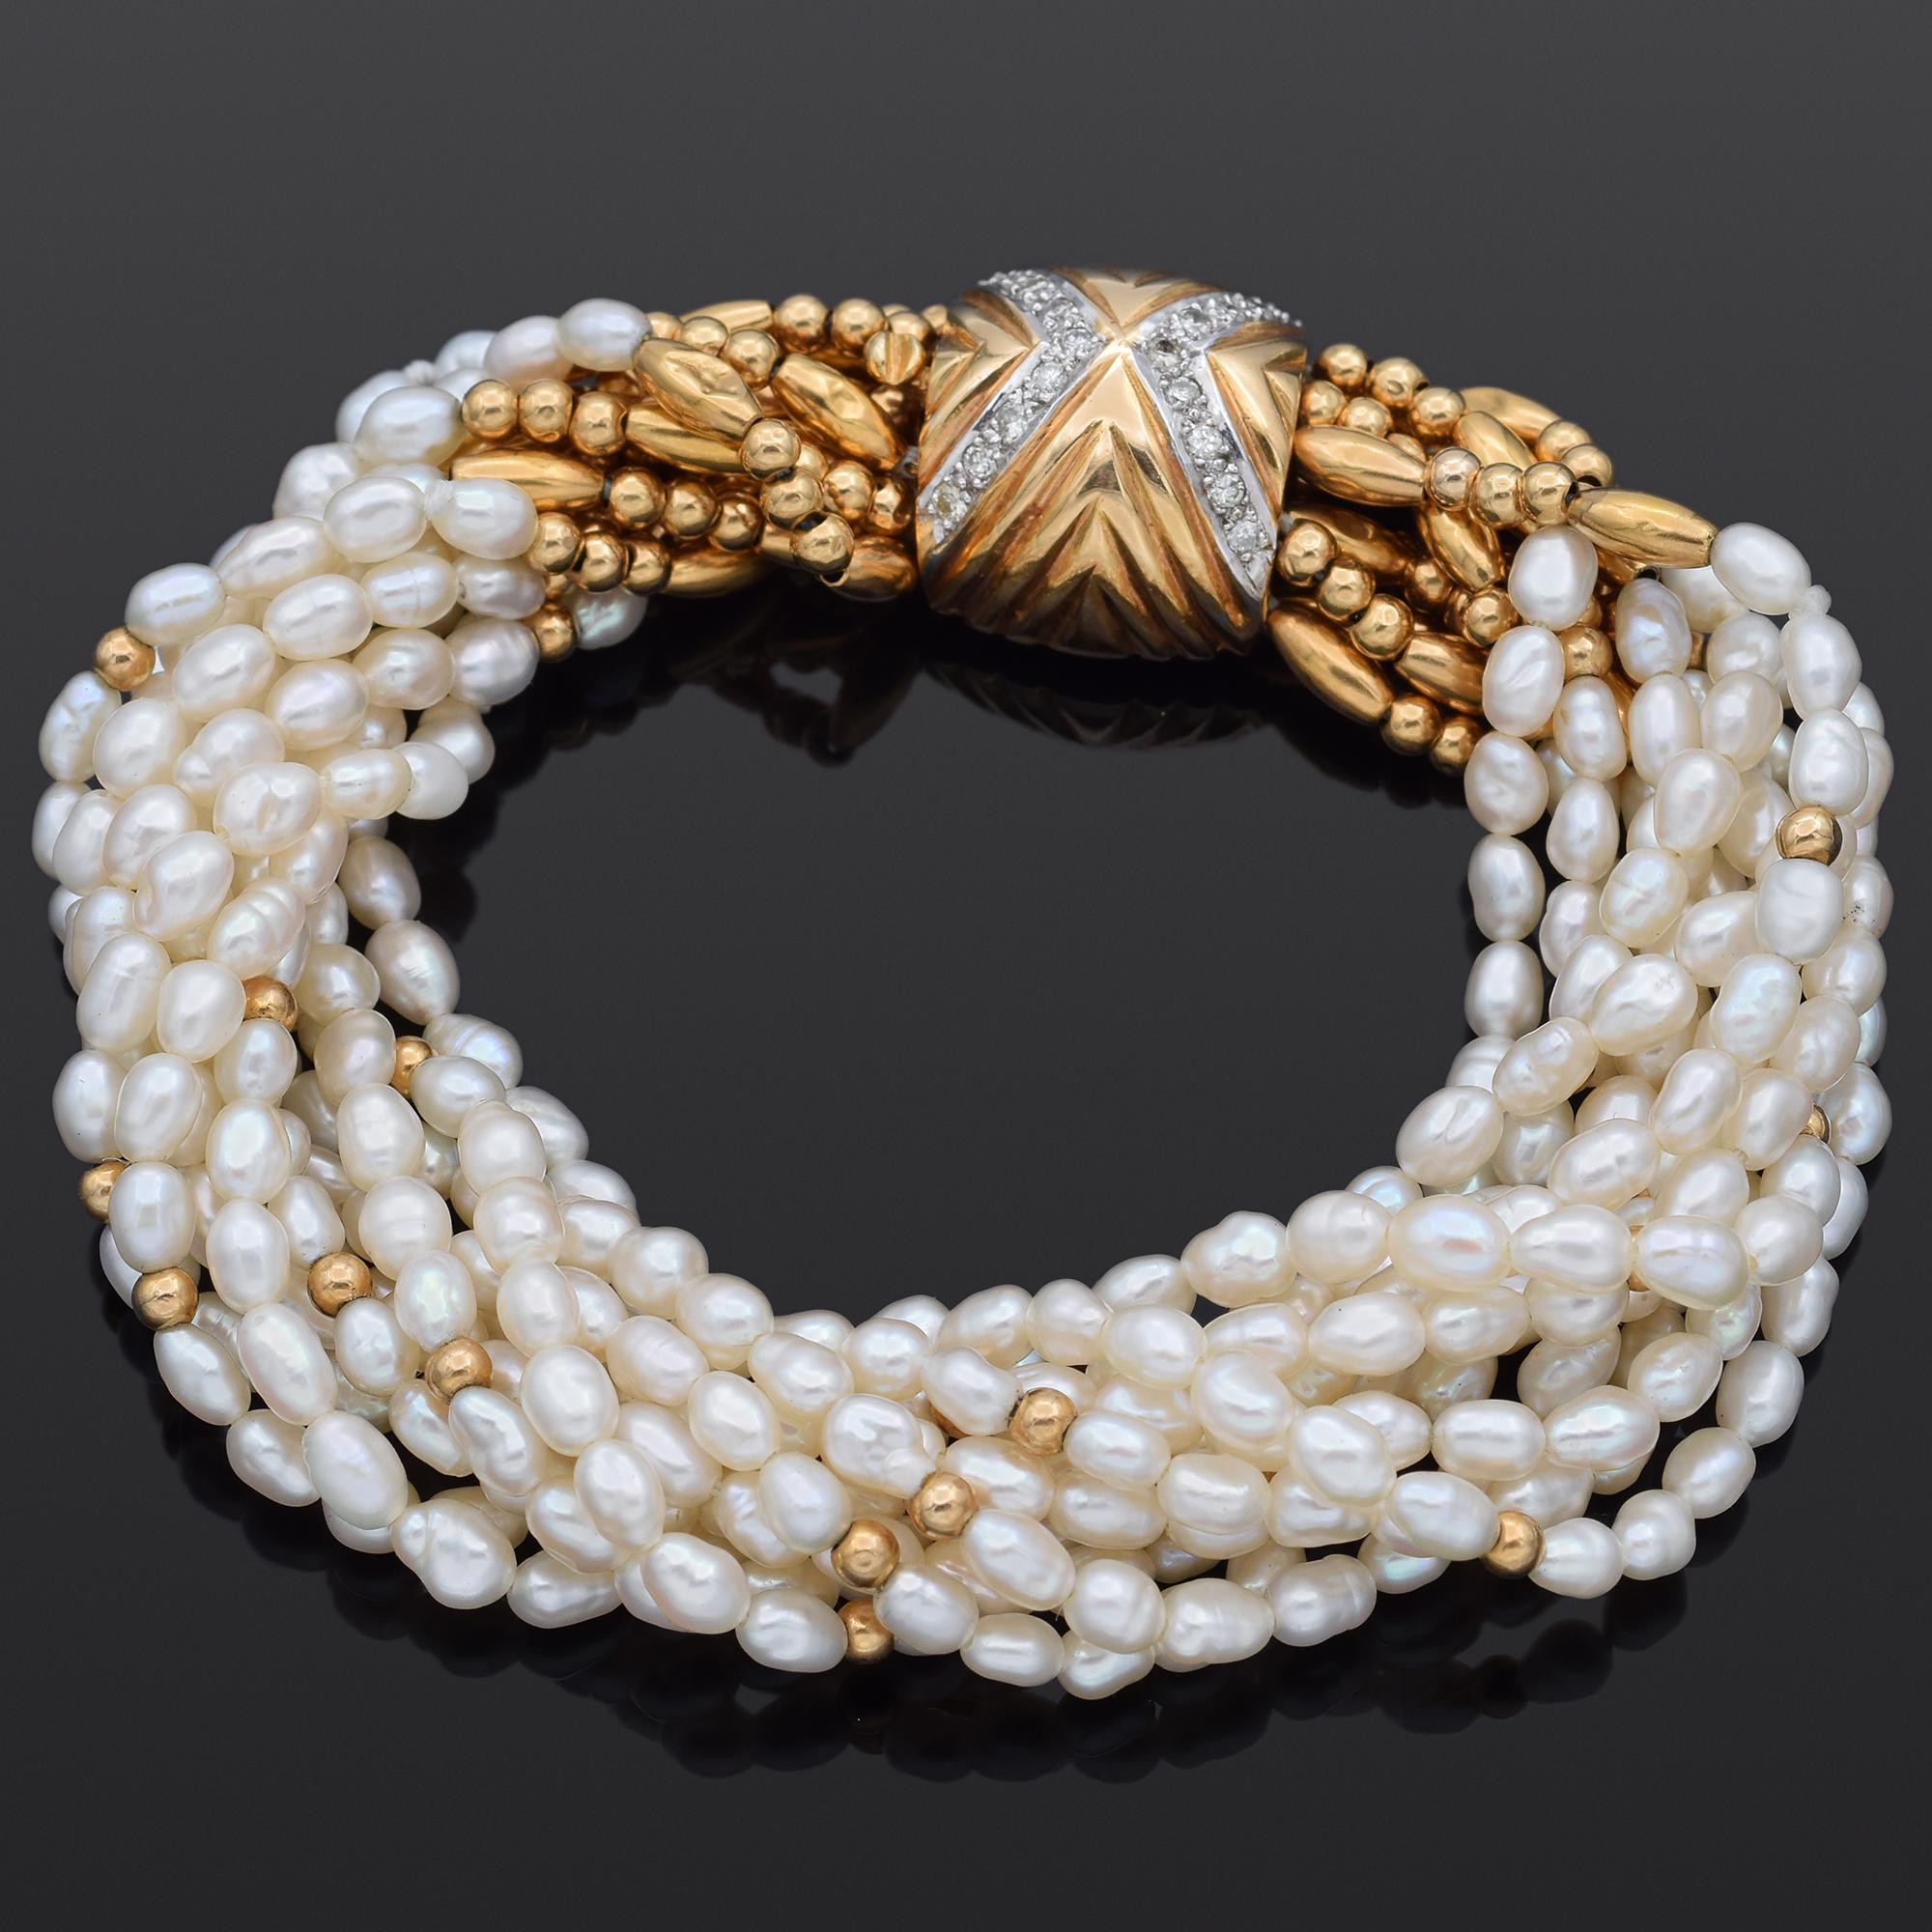 Weight: 25.0 Grams
Stone: Pearl (4x3-4.5x3.0 mm) & Approx 0.27 TCW (0.015 ct) Diamonds
Bracelet Size: 5.5 Inches
Hallmark: 14K 585

ITEM #: BR-1072-101323-15